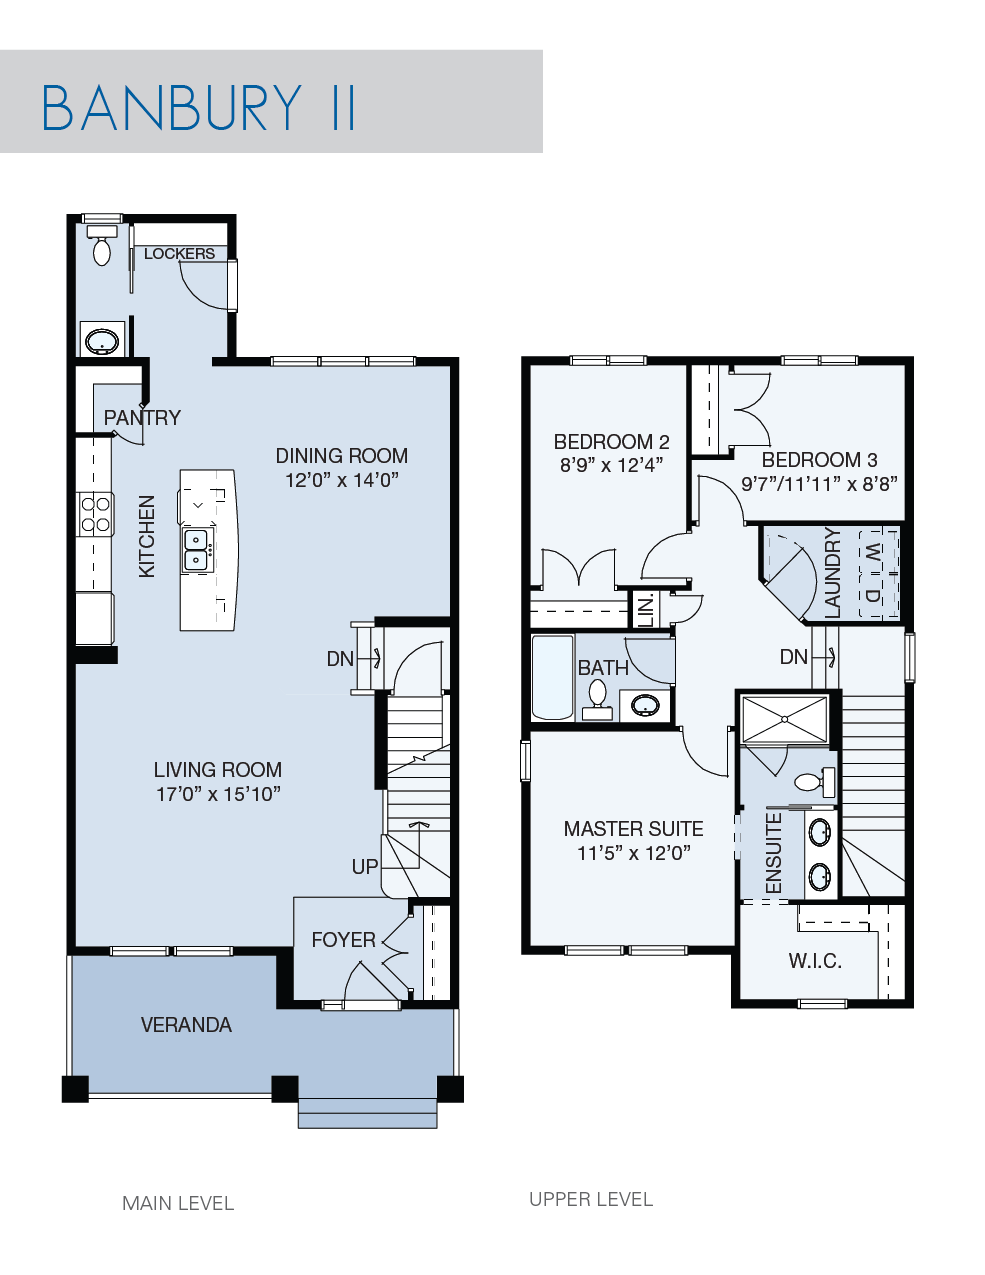 Banbury II floor plan by NuVista Homes